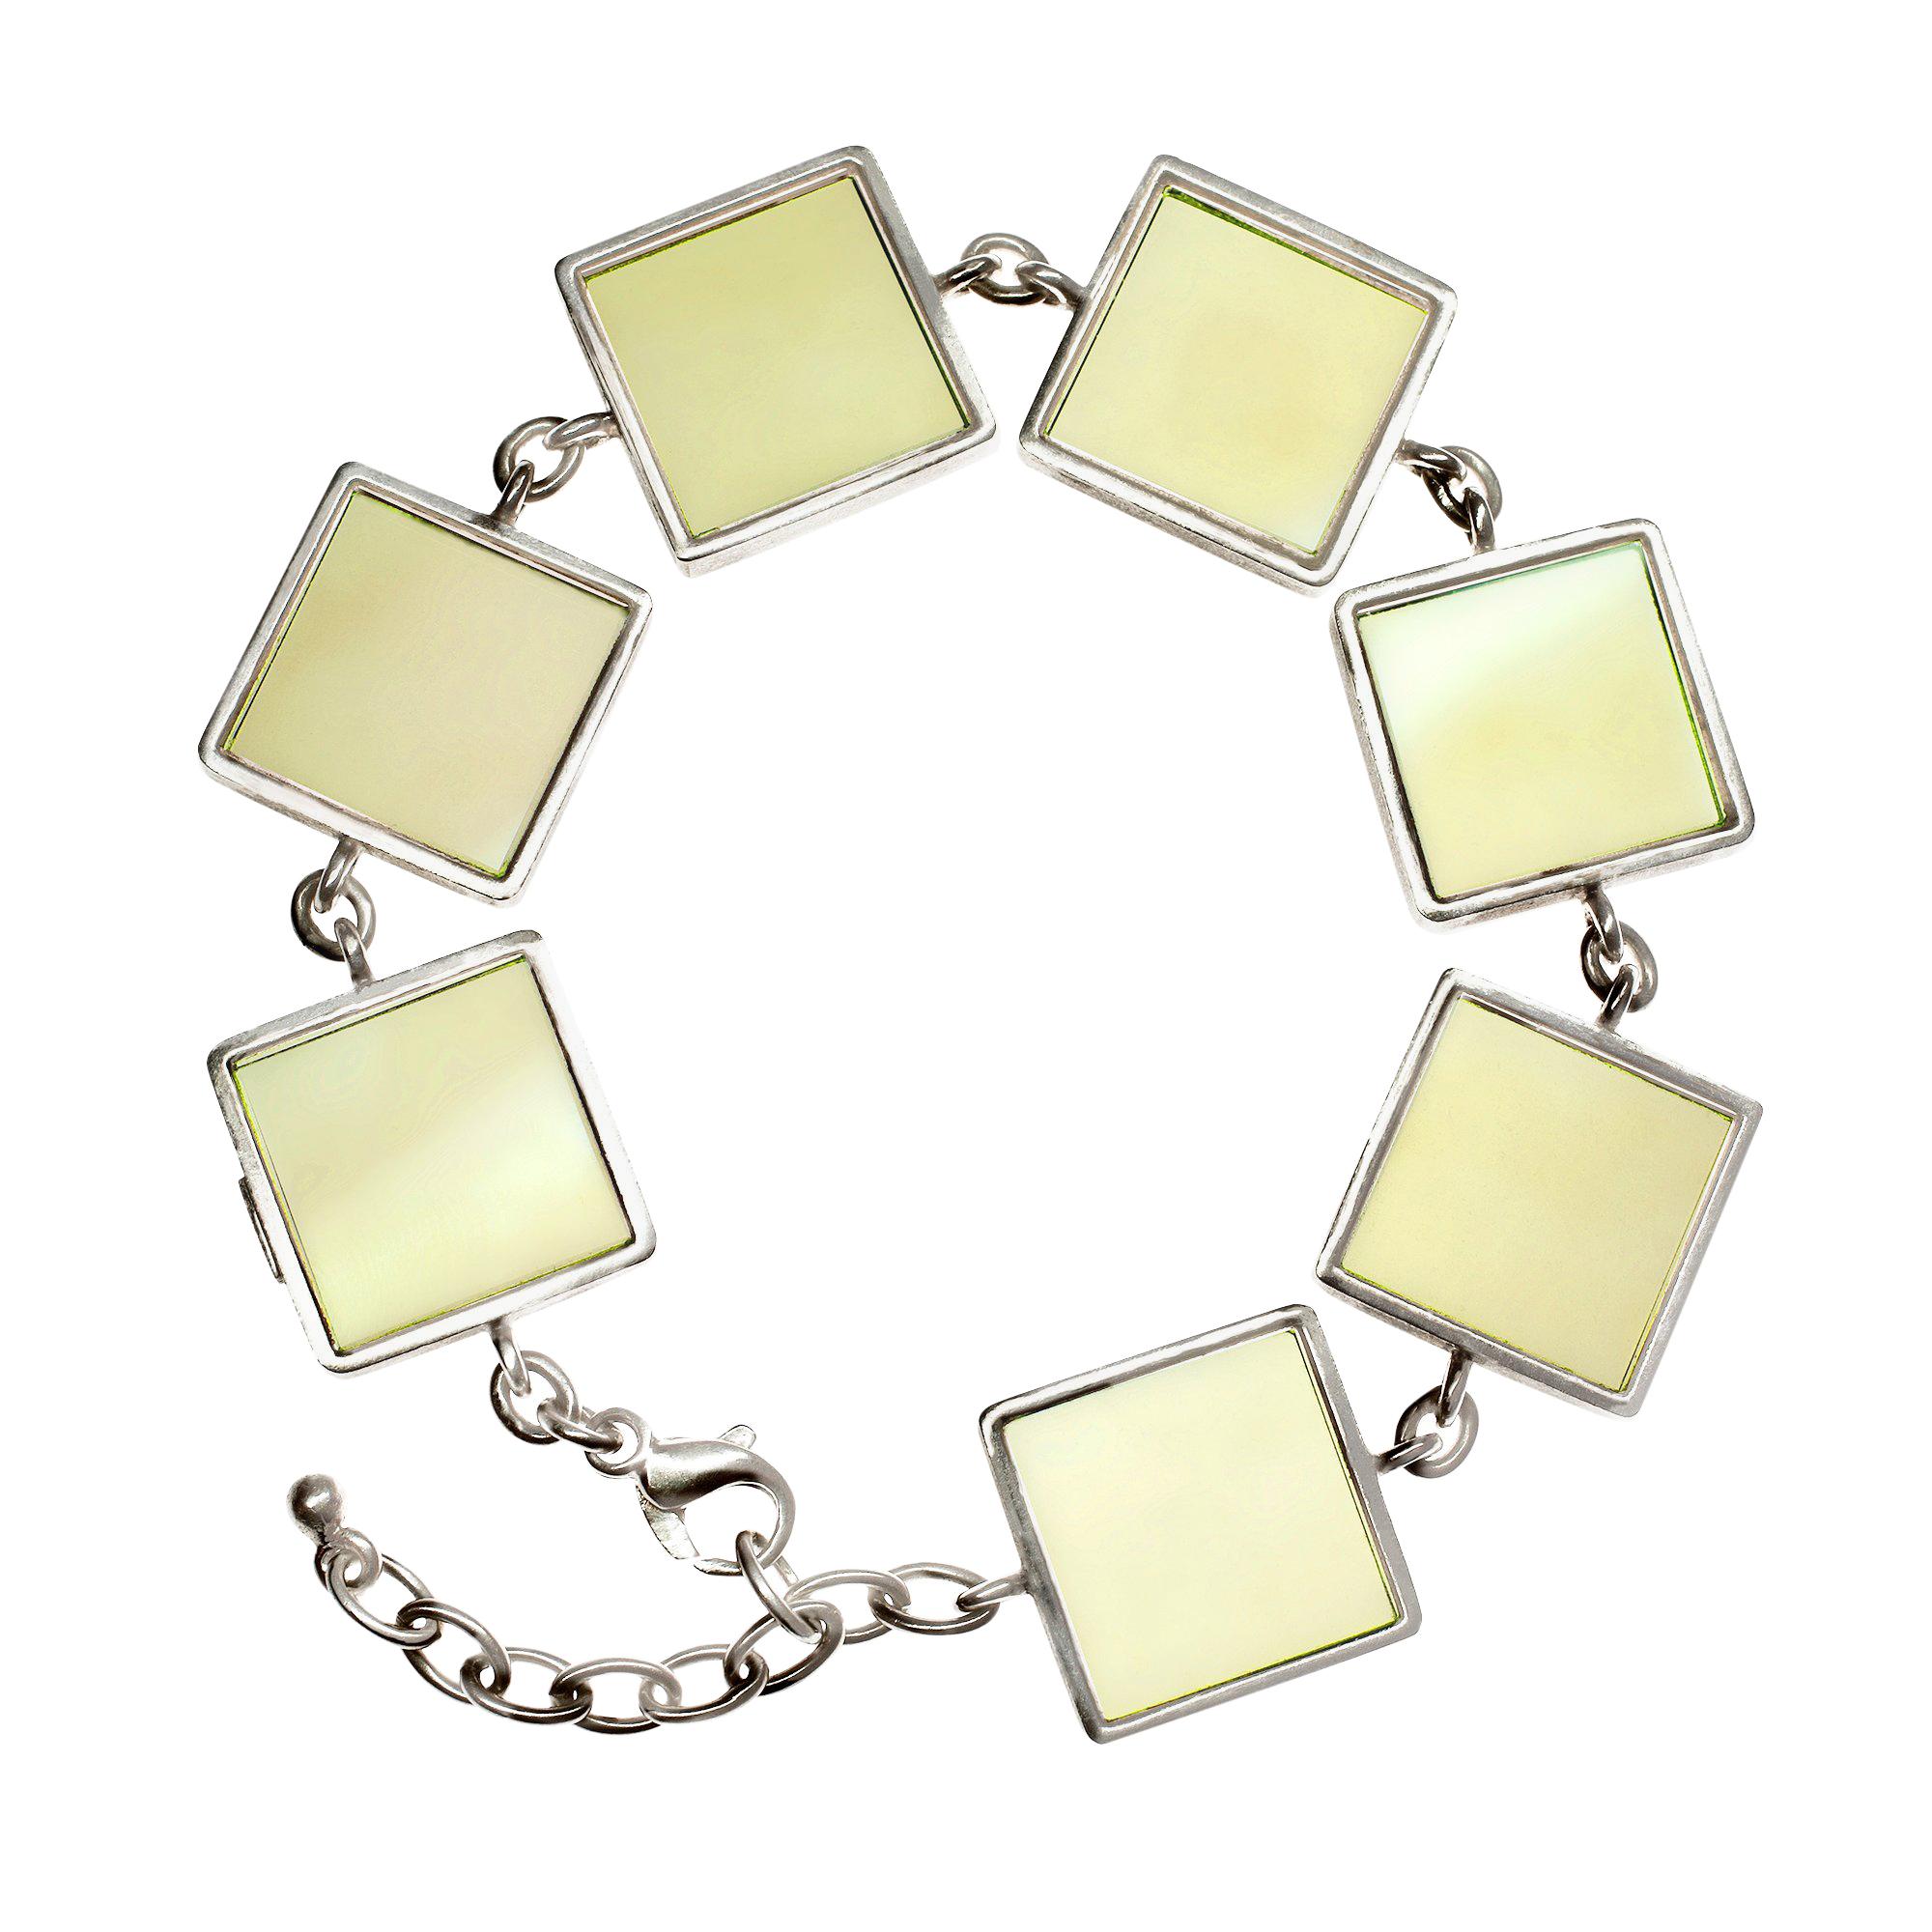 Featured in Vogue Sterling Silver Art Deco Style Bracelet with Lemon Quartzes For Sale